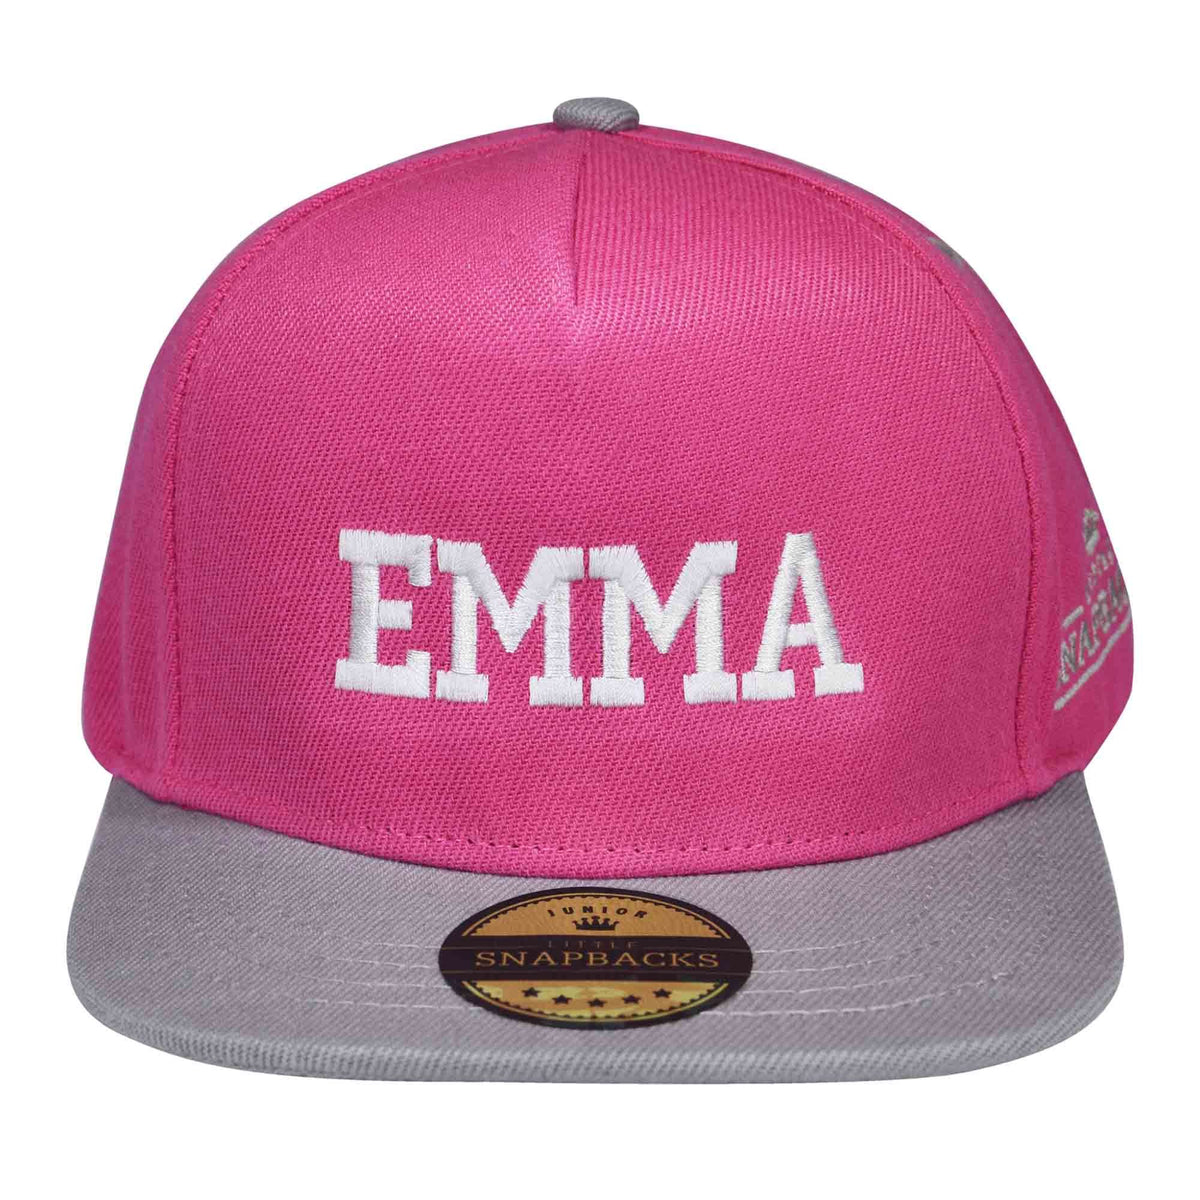 Personalised Kids Hats - Hot Pink & Grey Snapback